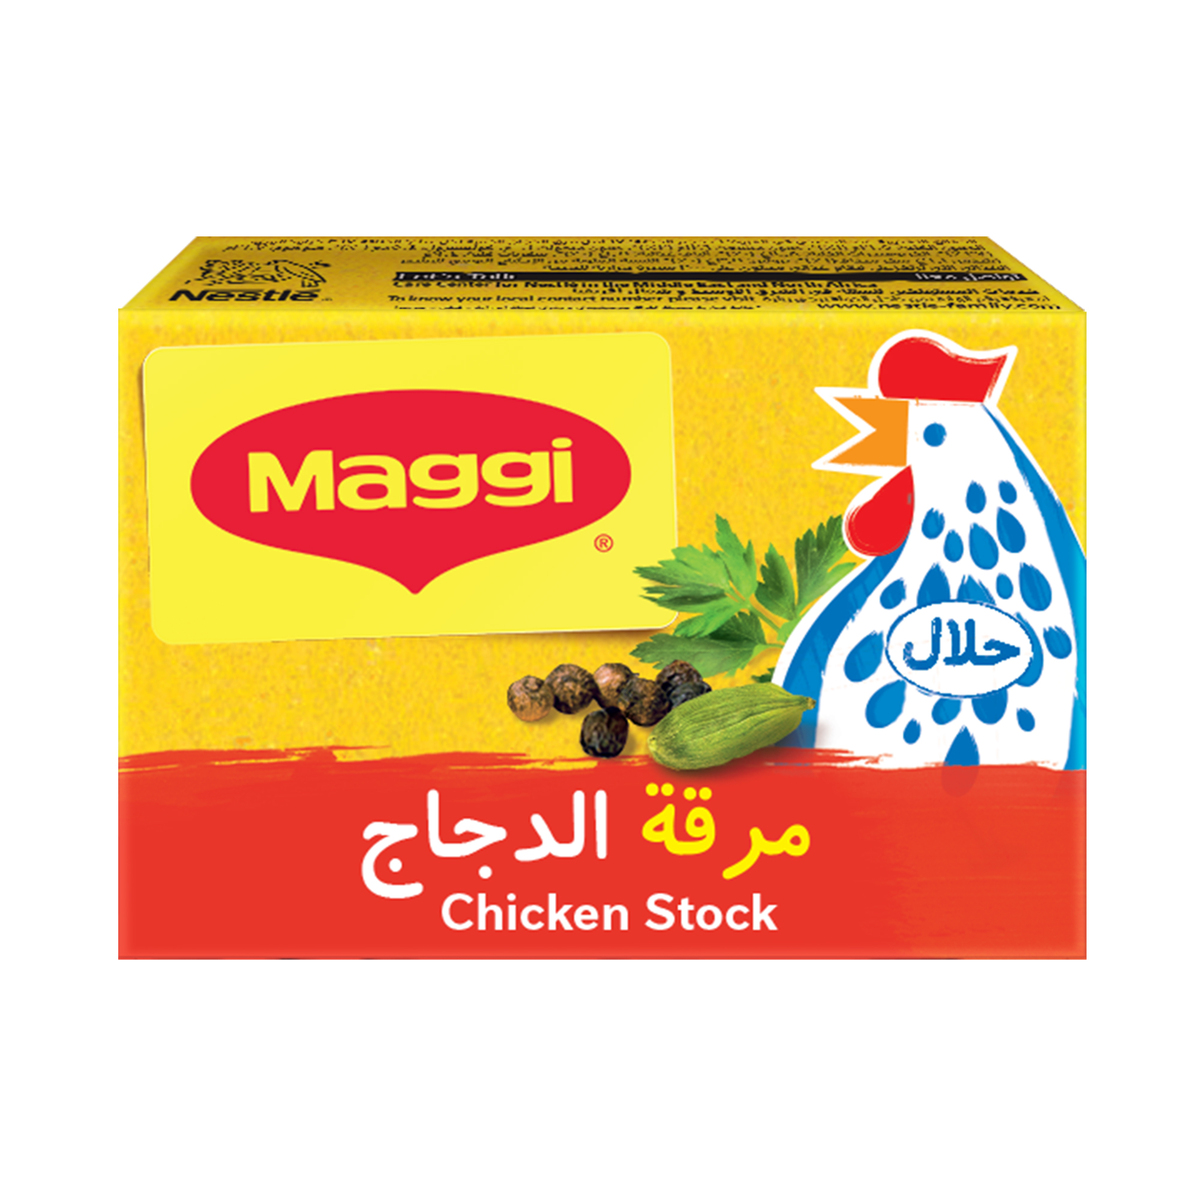 Maggi Chicken Stock 24 x 18 g